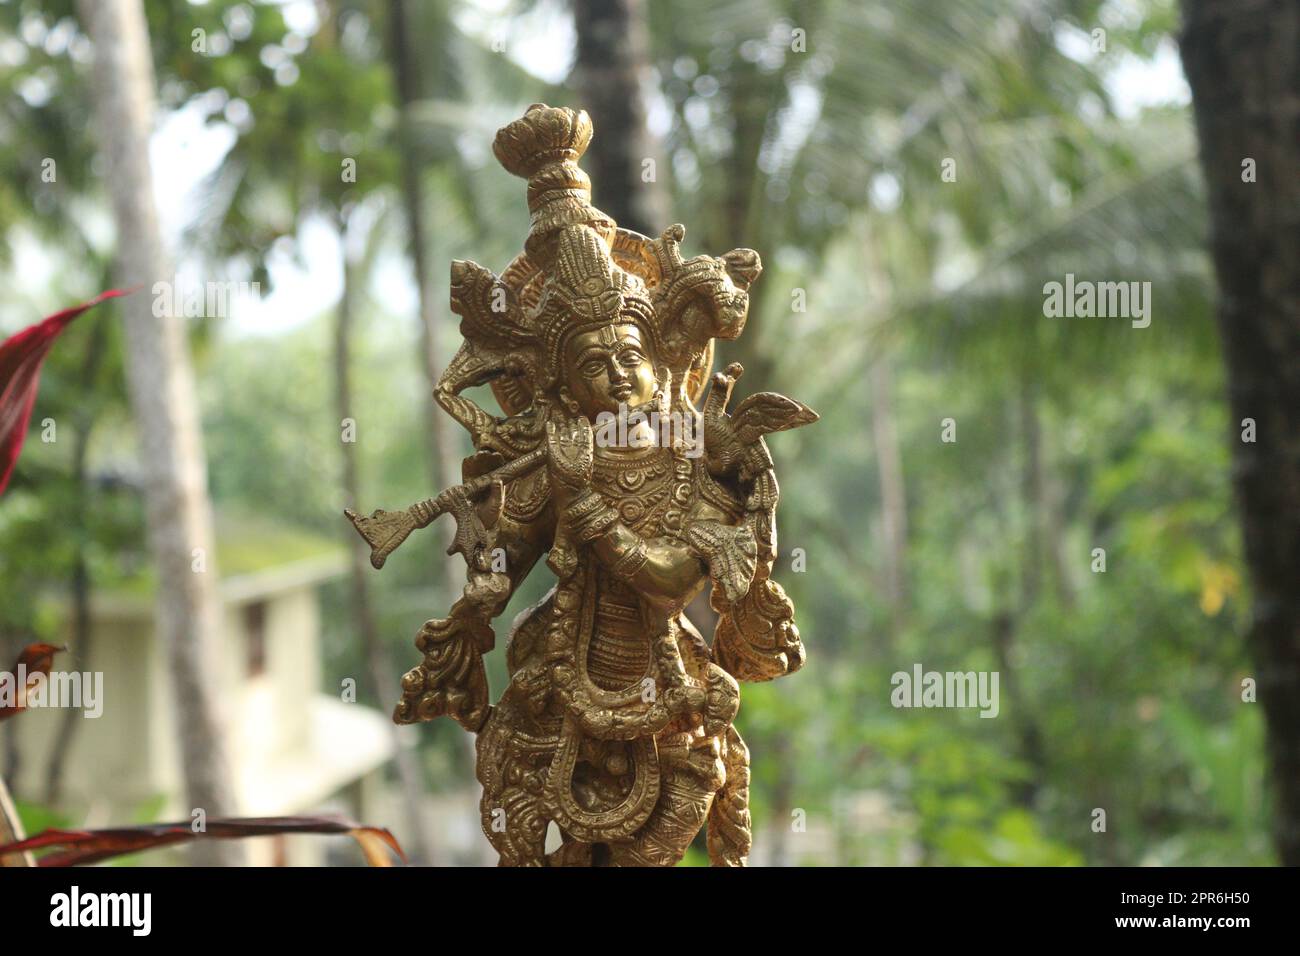 Lord krishna brass idol in golden color Stock Photo